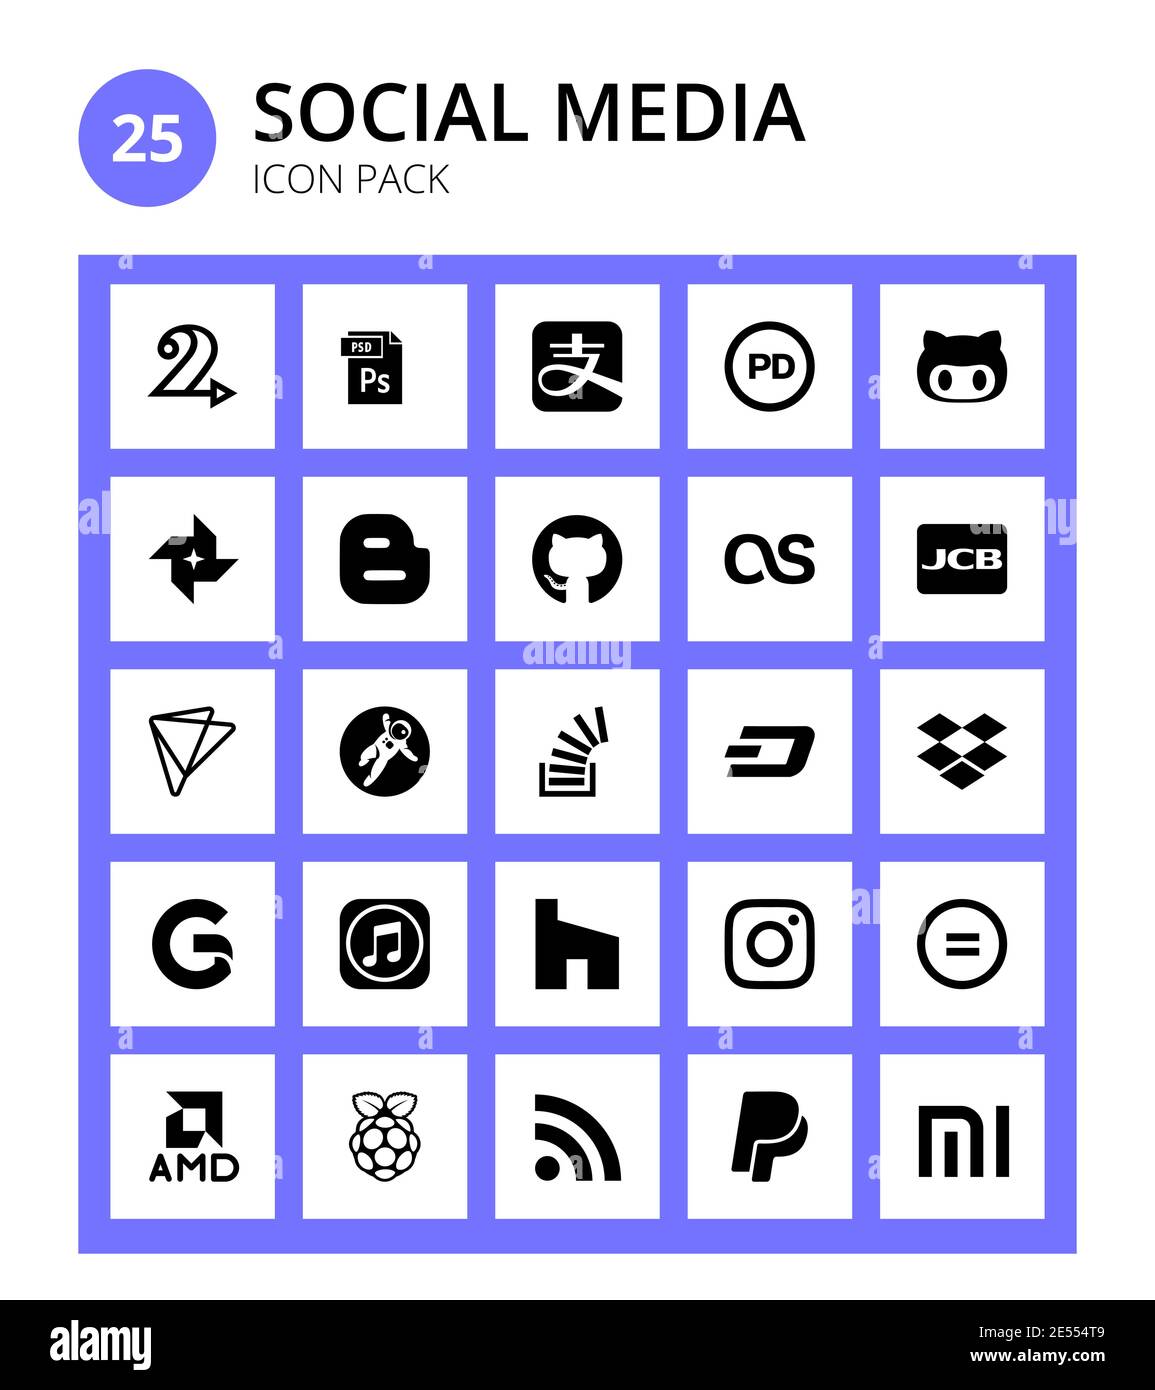 Set von 25 Social Logo pushed, jcb, alt, lastfm, Blogger editierbare Vektor Design-Elemente Stock Vektor